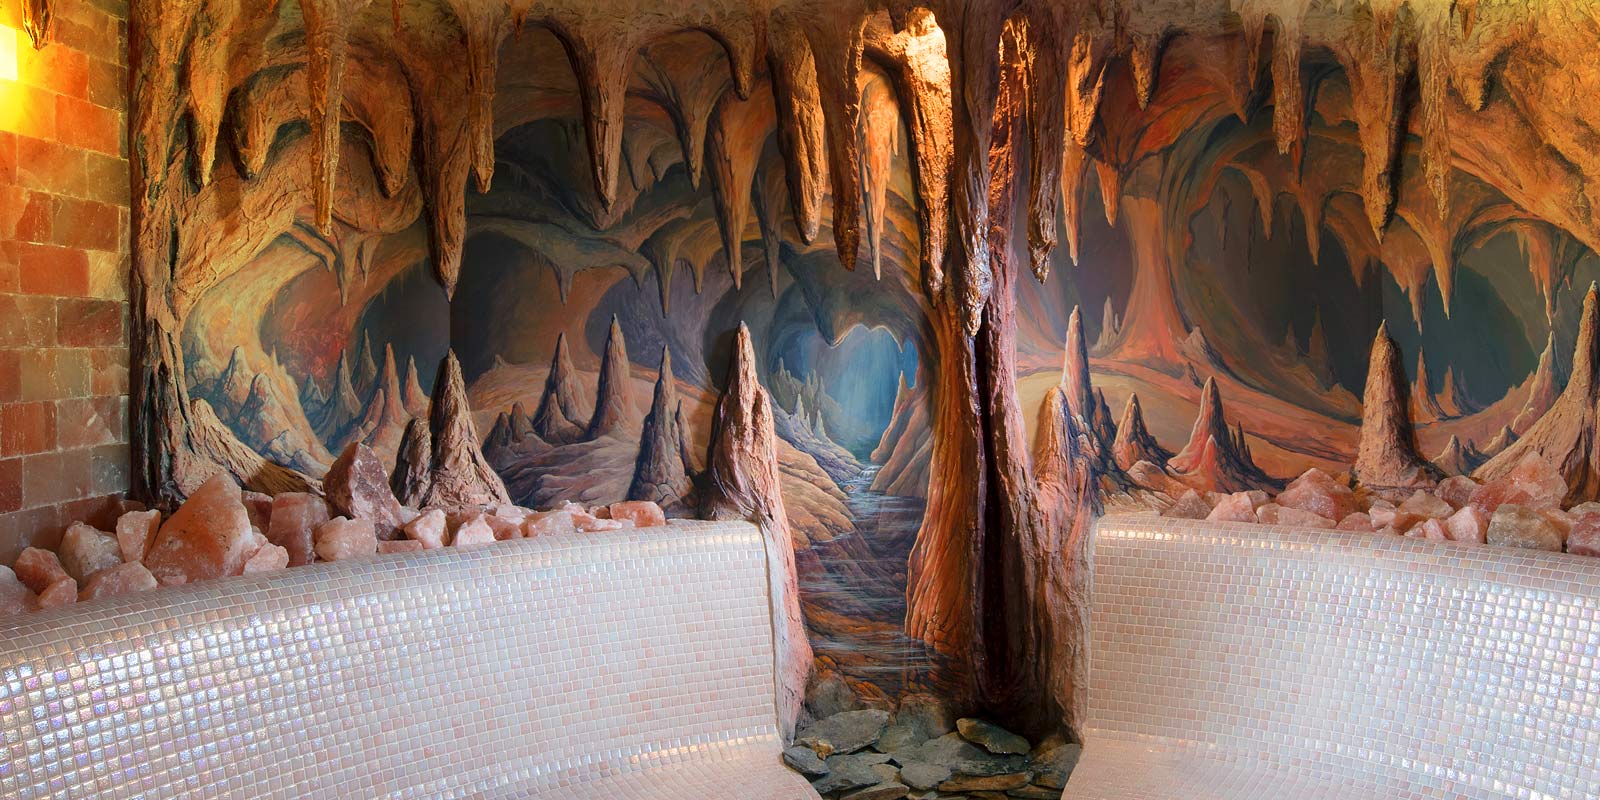 Solné krystaly a krápníky v solné jeskyni hotelového wellness v Mariánských lázních